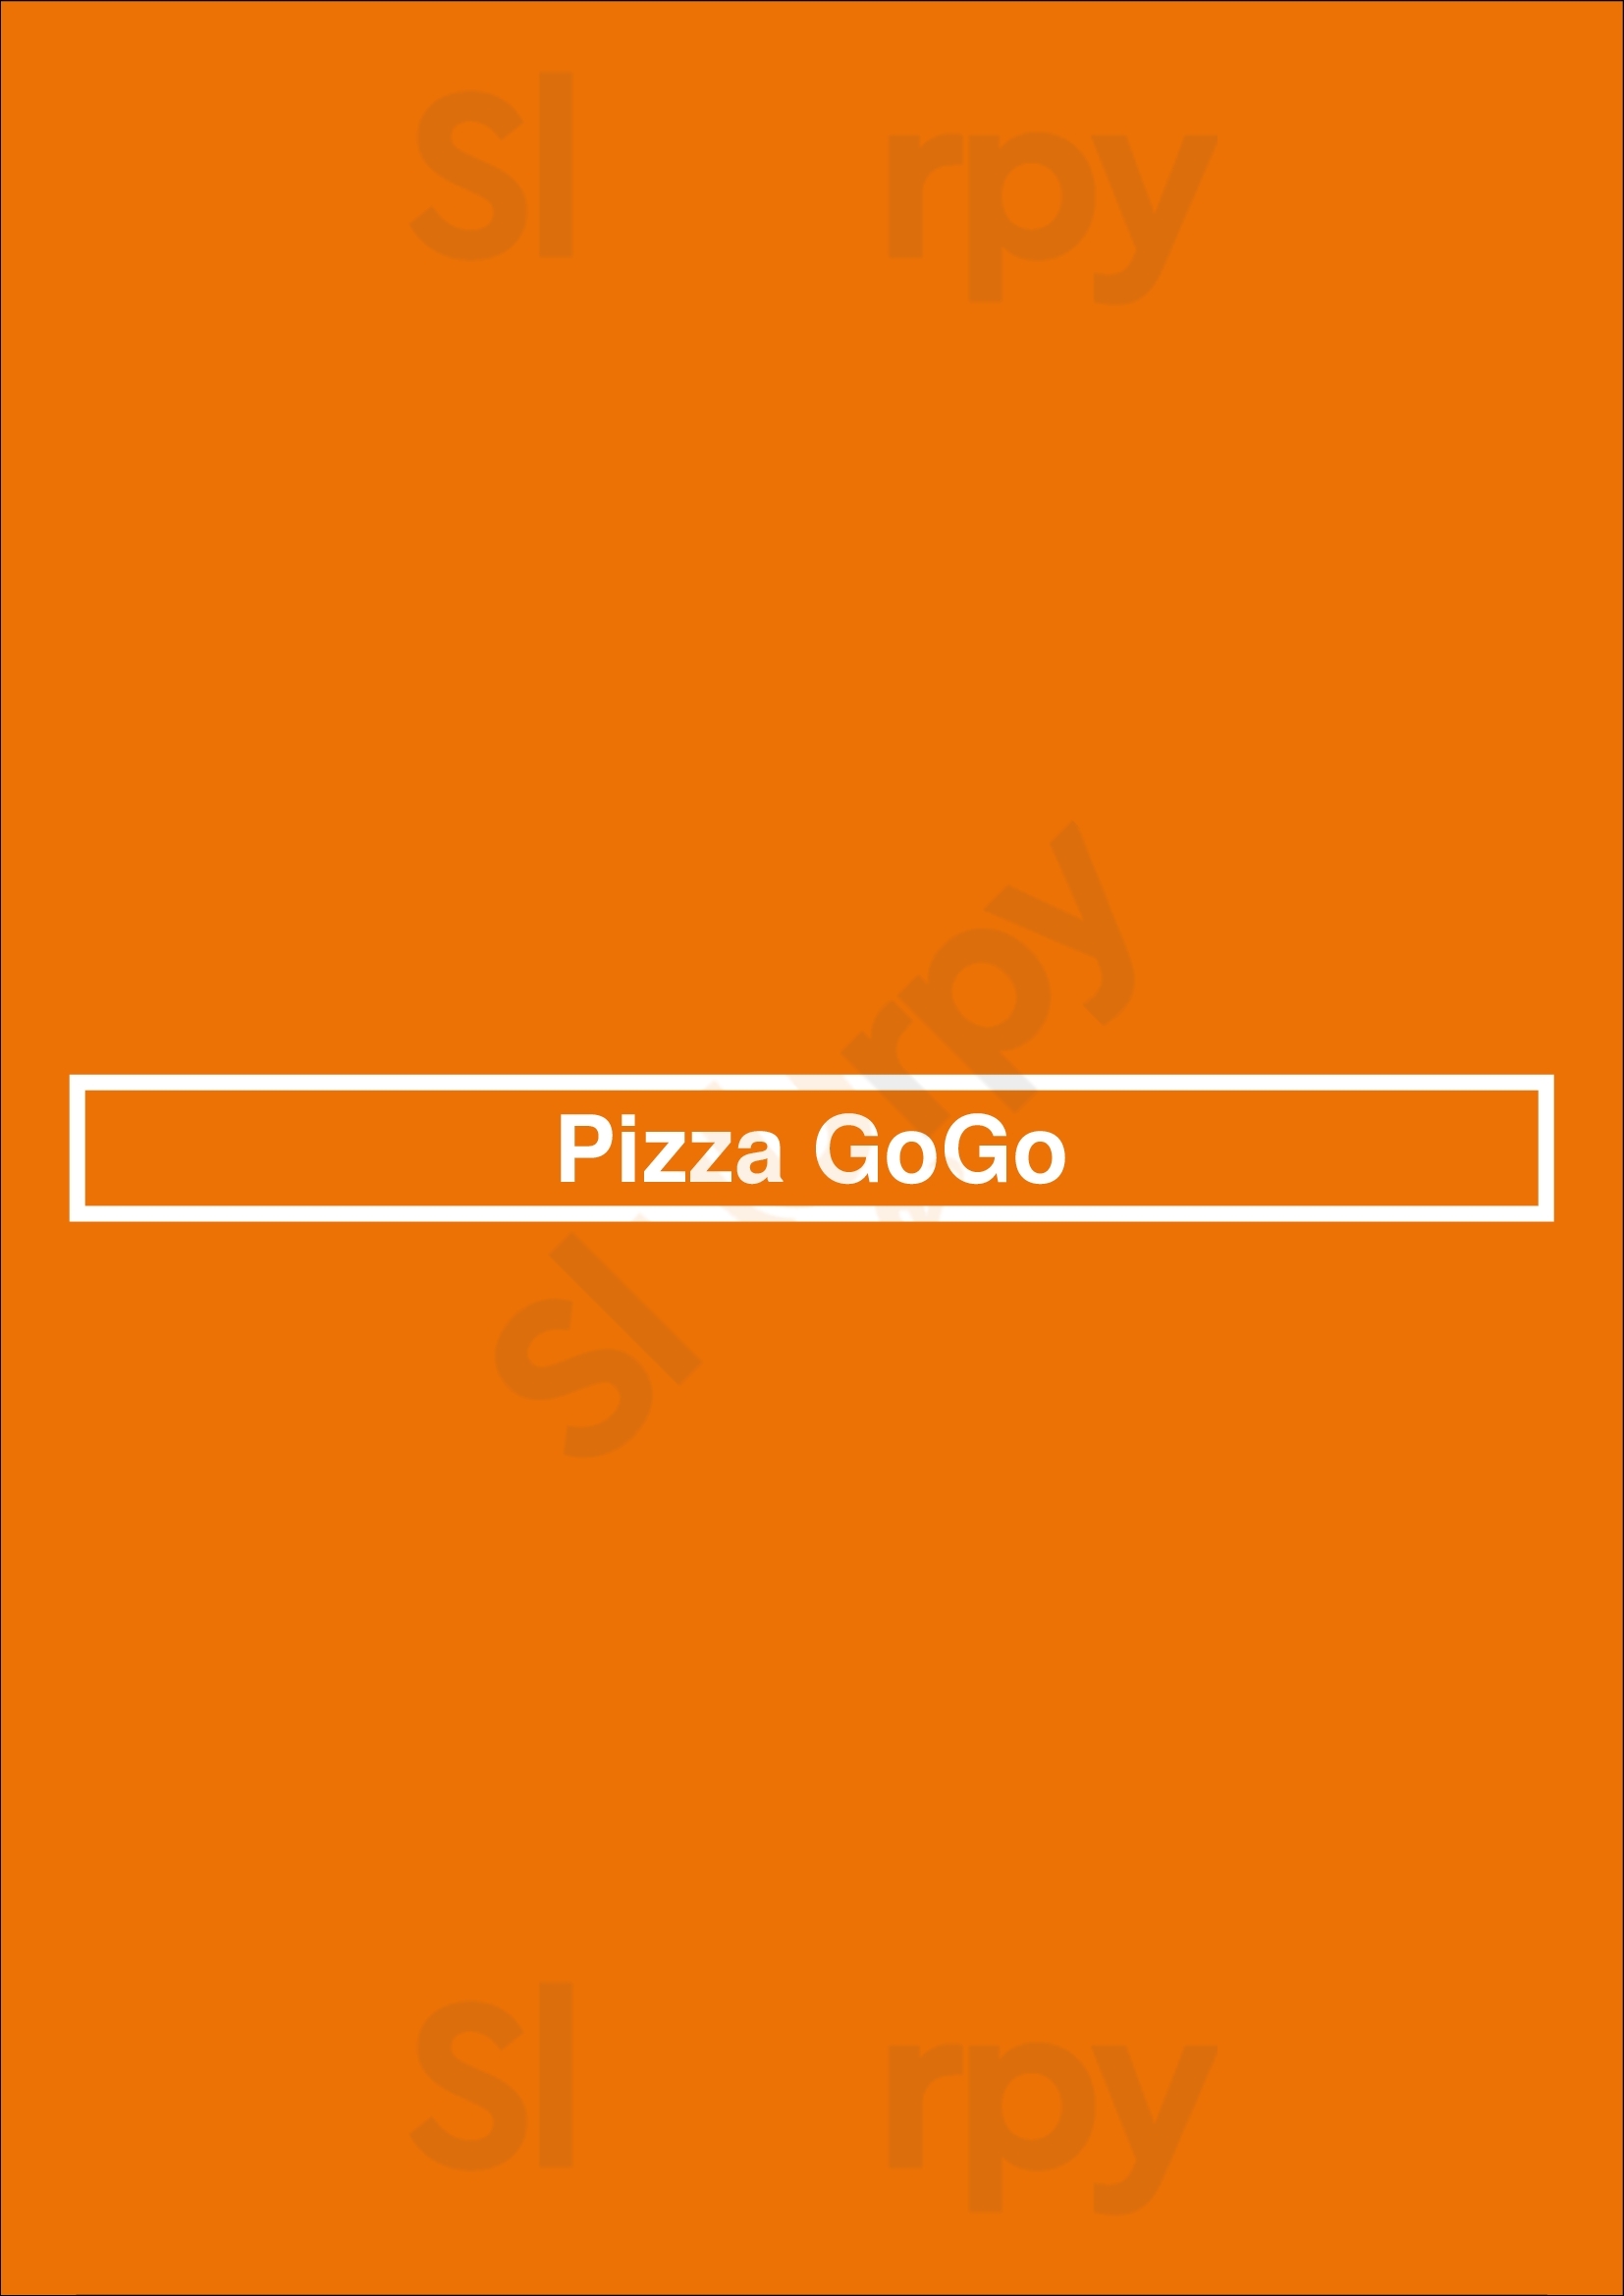 Pizza Gogo Cardiff Menu - 1